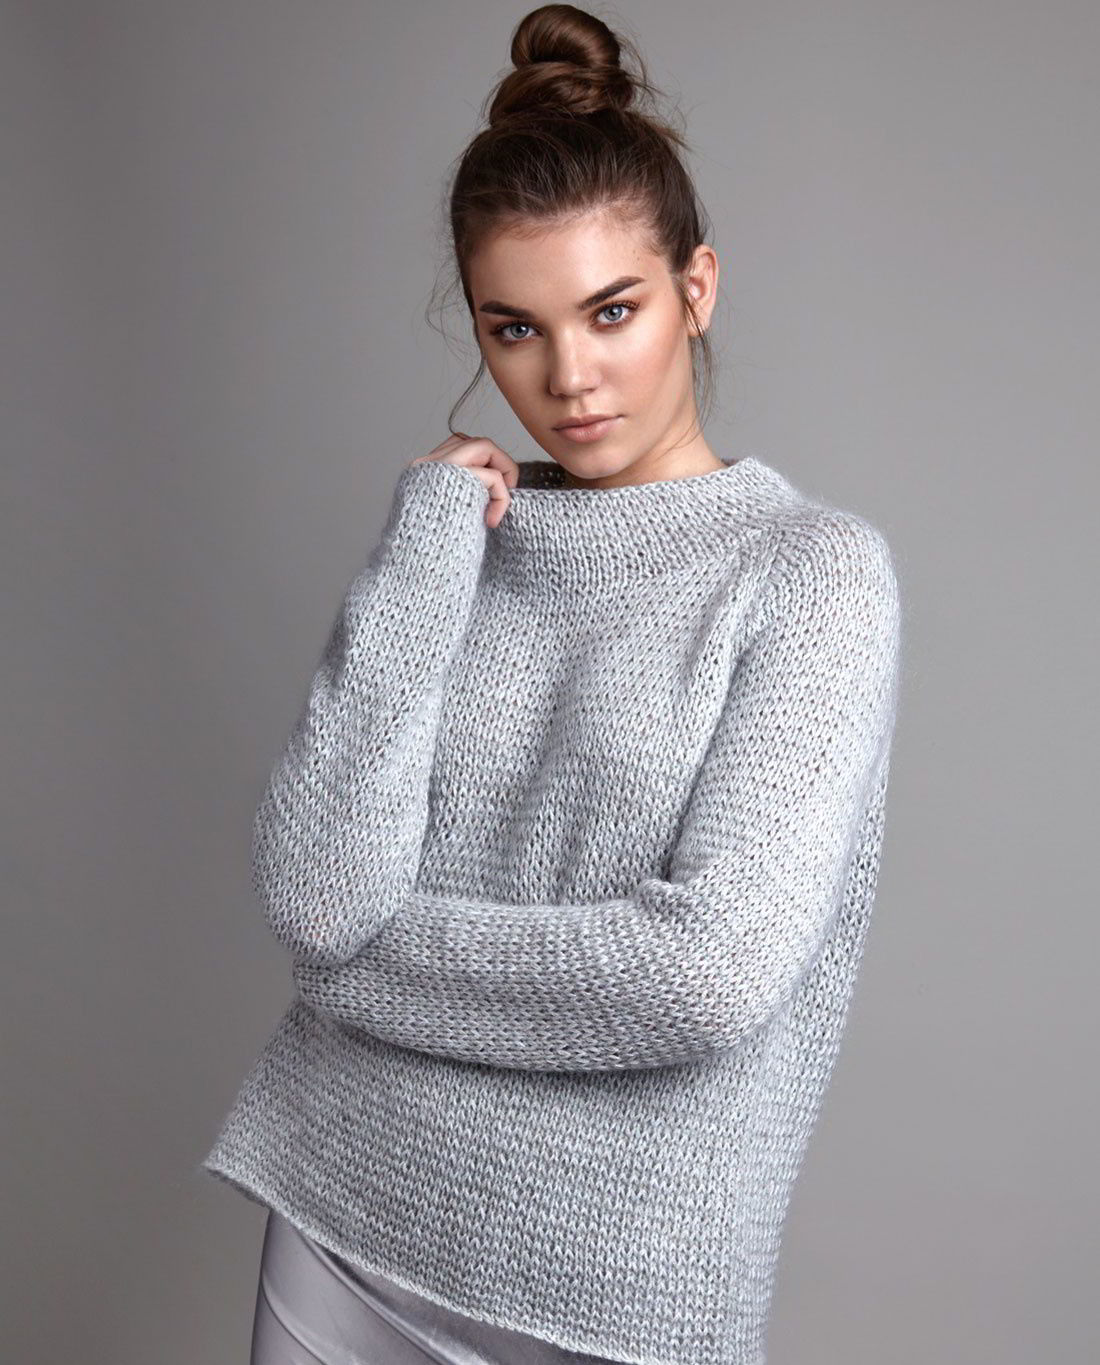 Пуловер Calmer от Ким Харгривз